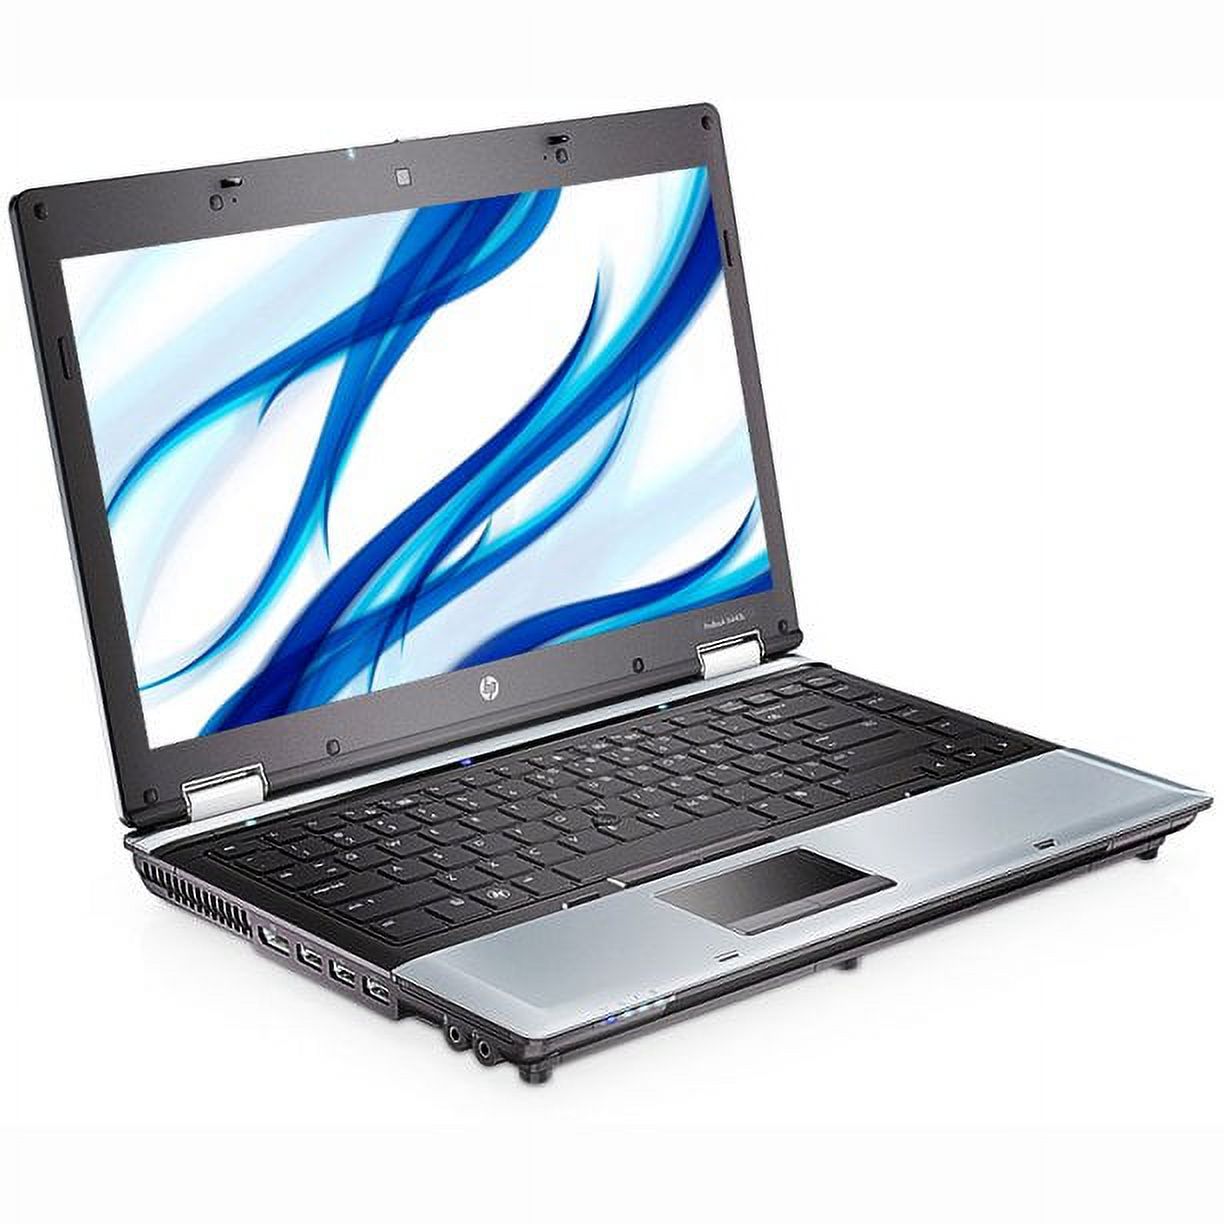 HP ProBook 6450b Laptop- 320GB HDD, 8GB RAM, i5-520M CPU, Windows 10 - Used - image 4 of 4